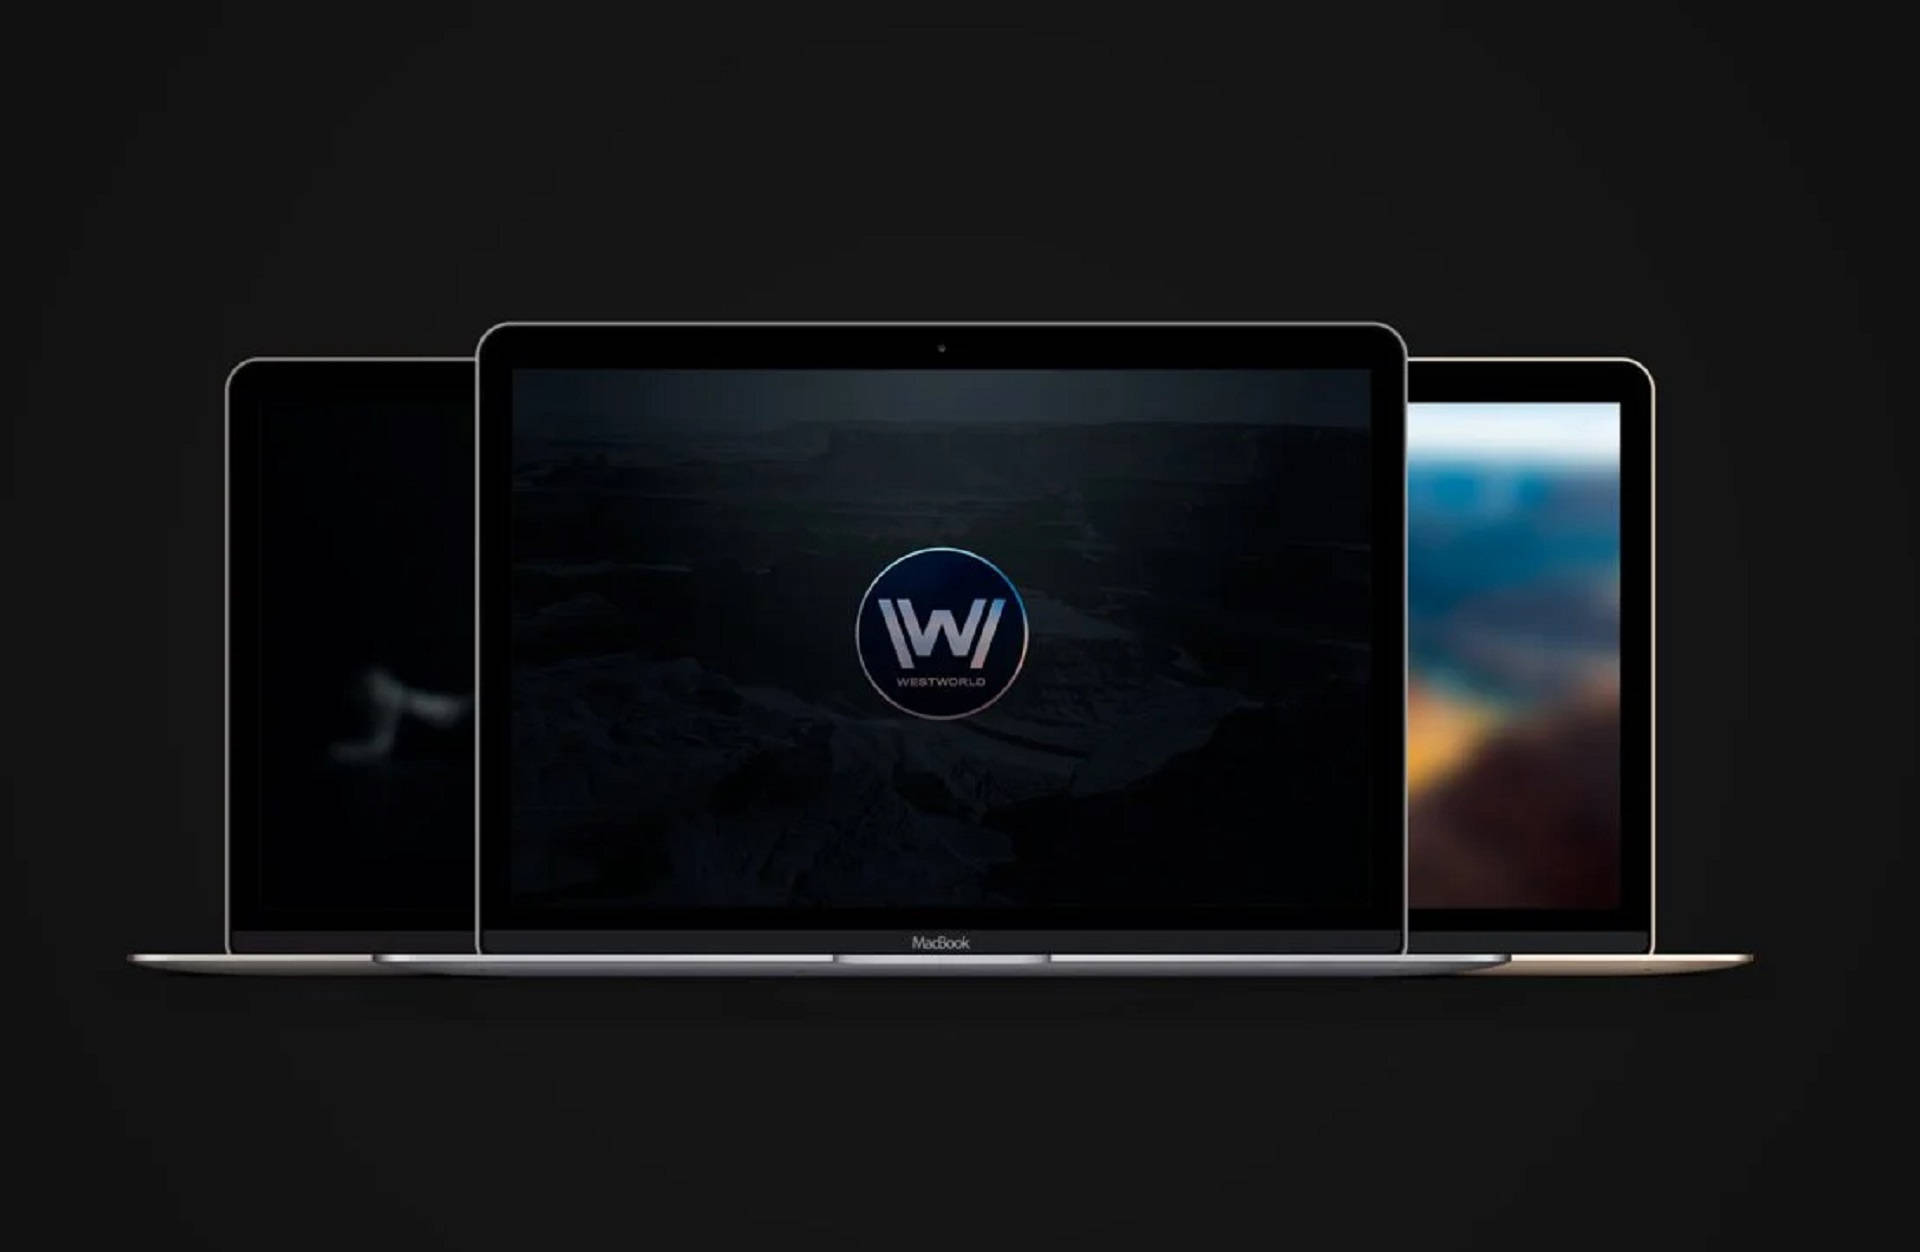 Westworld Icon In Macbook